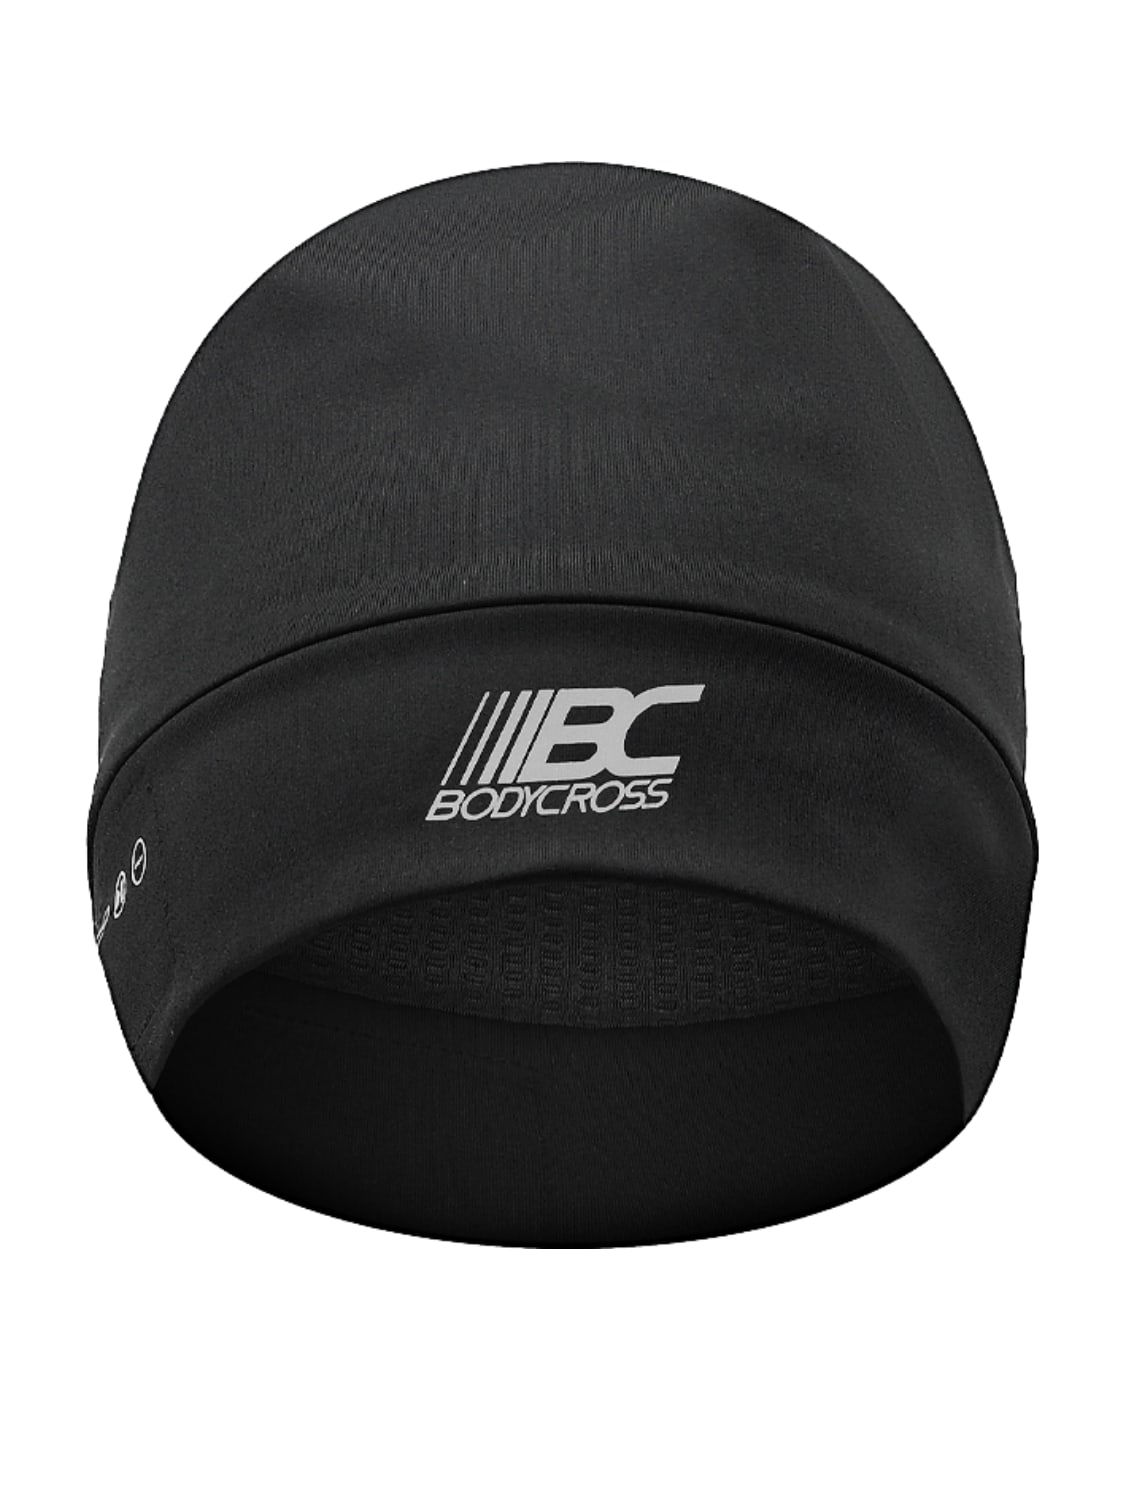 Bonnet de sport Bluetooth et imperméable OREL BODYCROSS